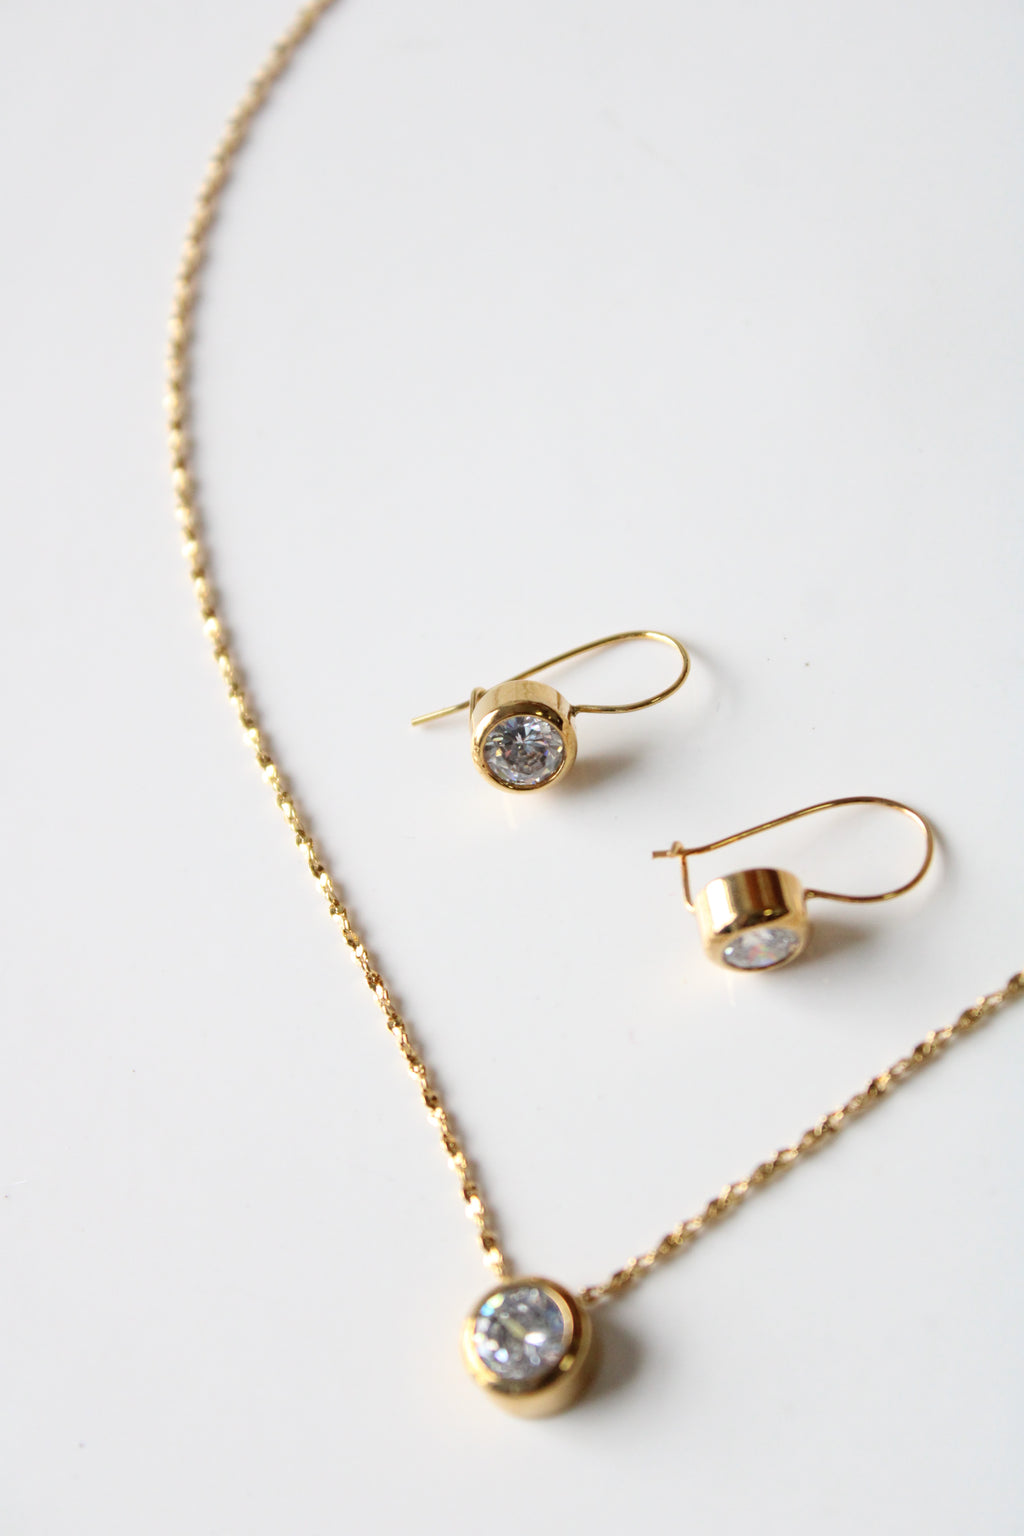 Avon Bezel Set Cubic Zirconia Gold Tone Necklace & Earring Set